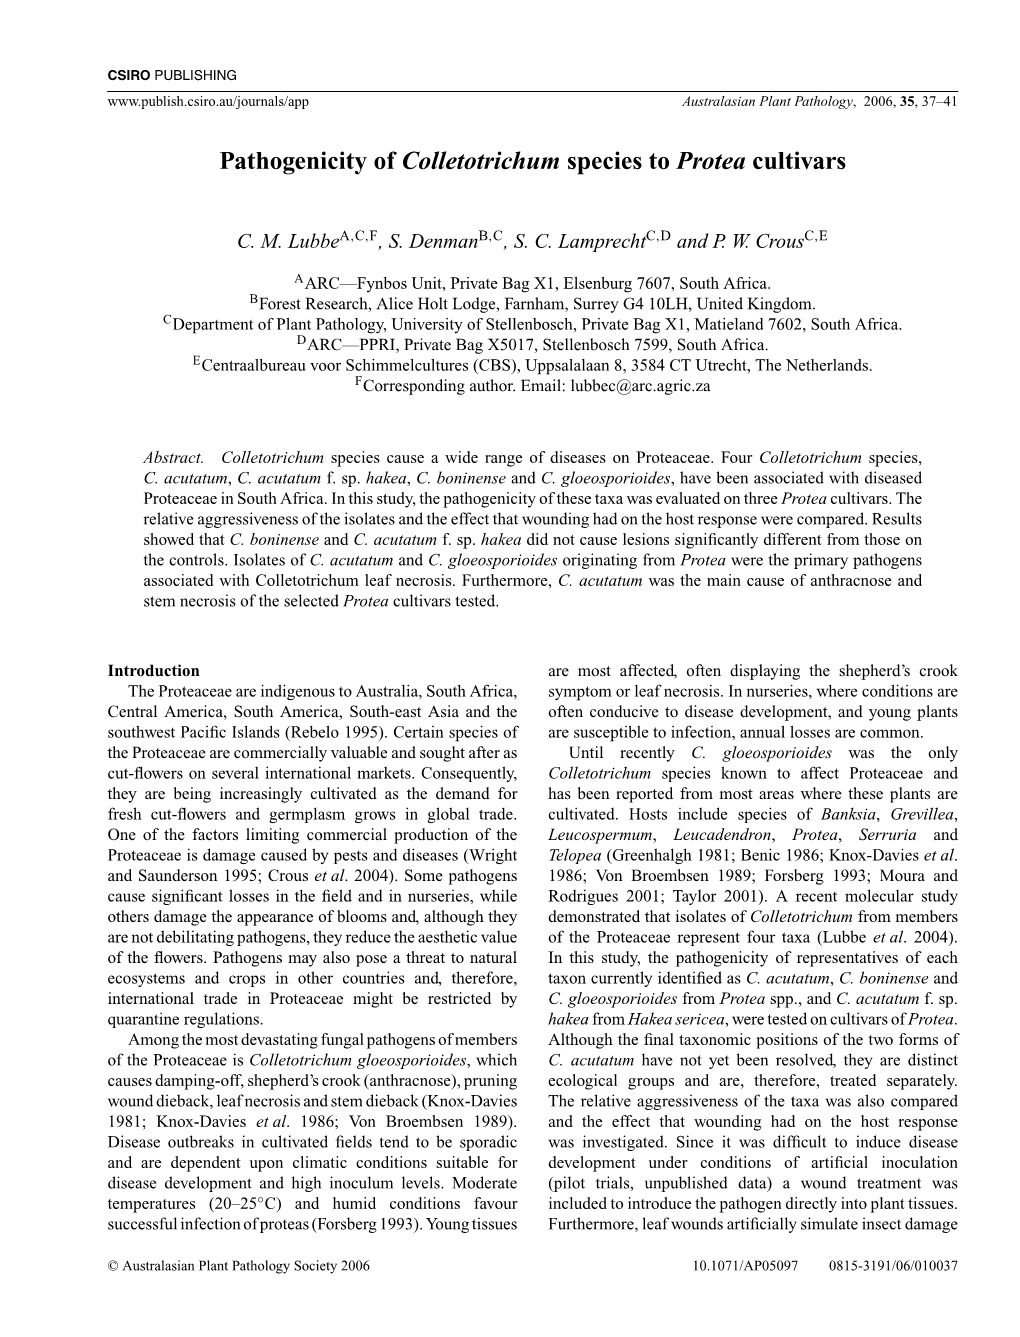 Pathogenicity of Colletotrichum Species to Protea Cultivars